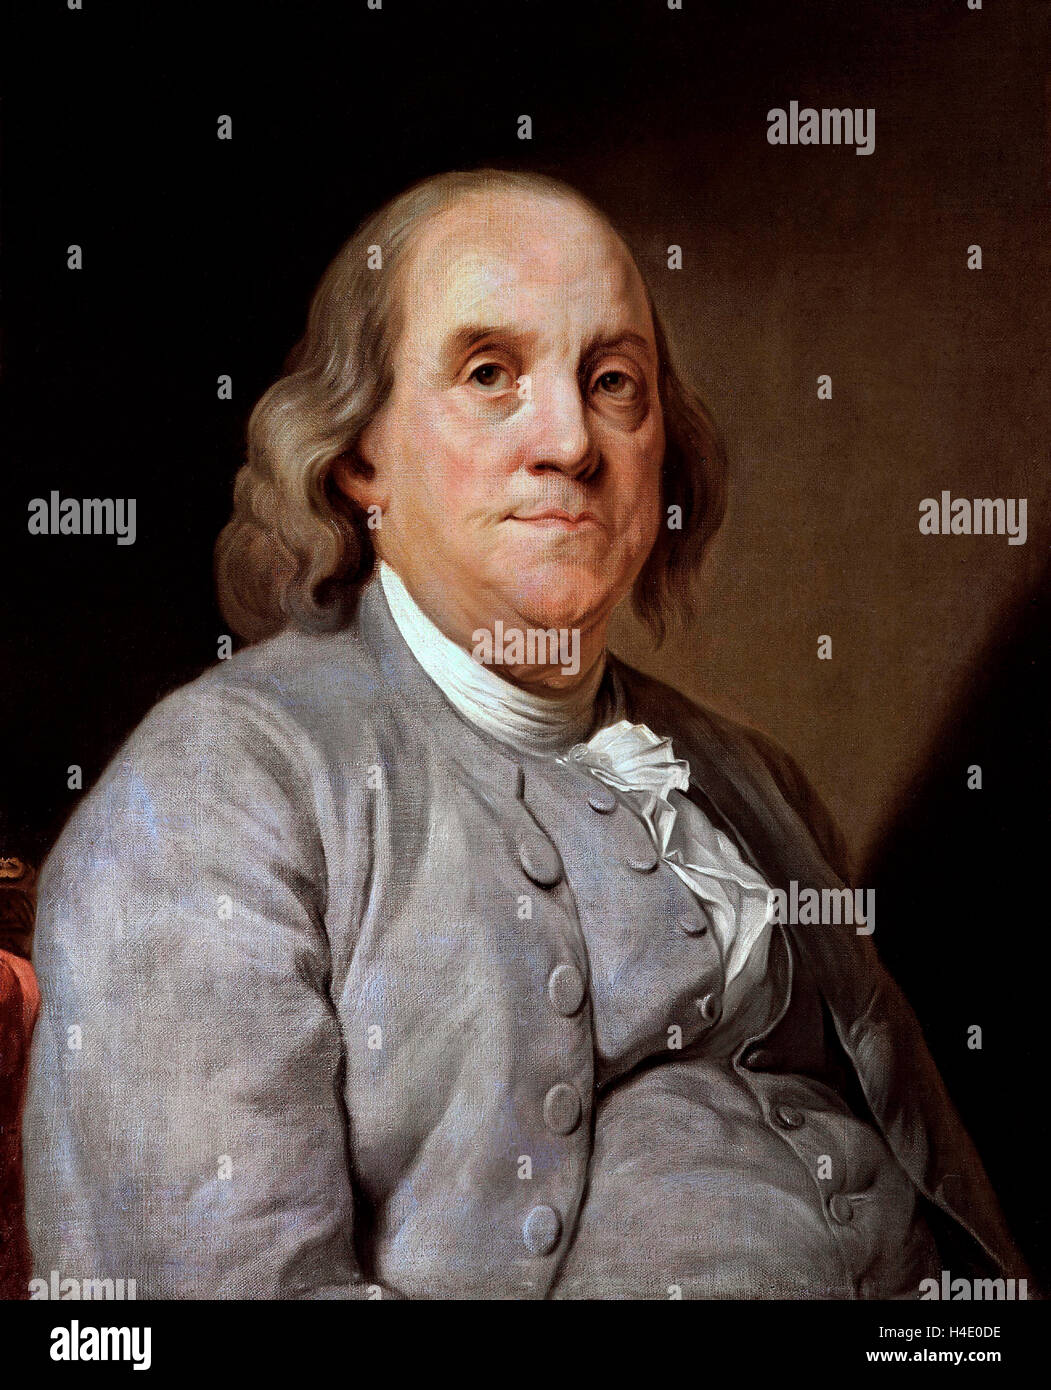 Benjamin Franklin, portrait by Joseph Duplessis, c.1785. Stock Photo